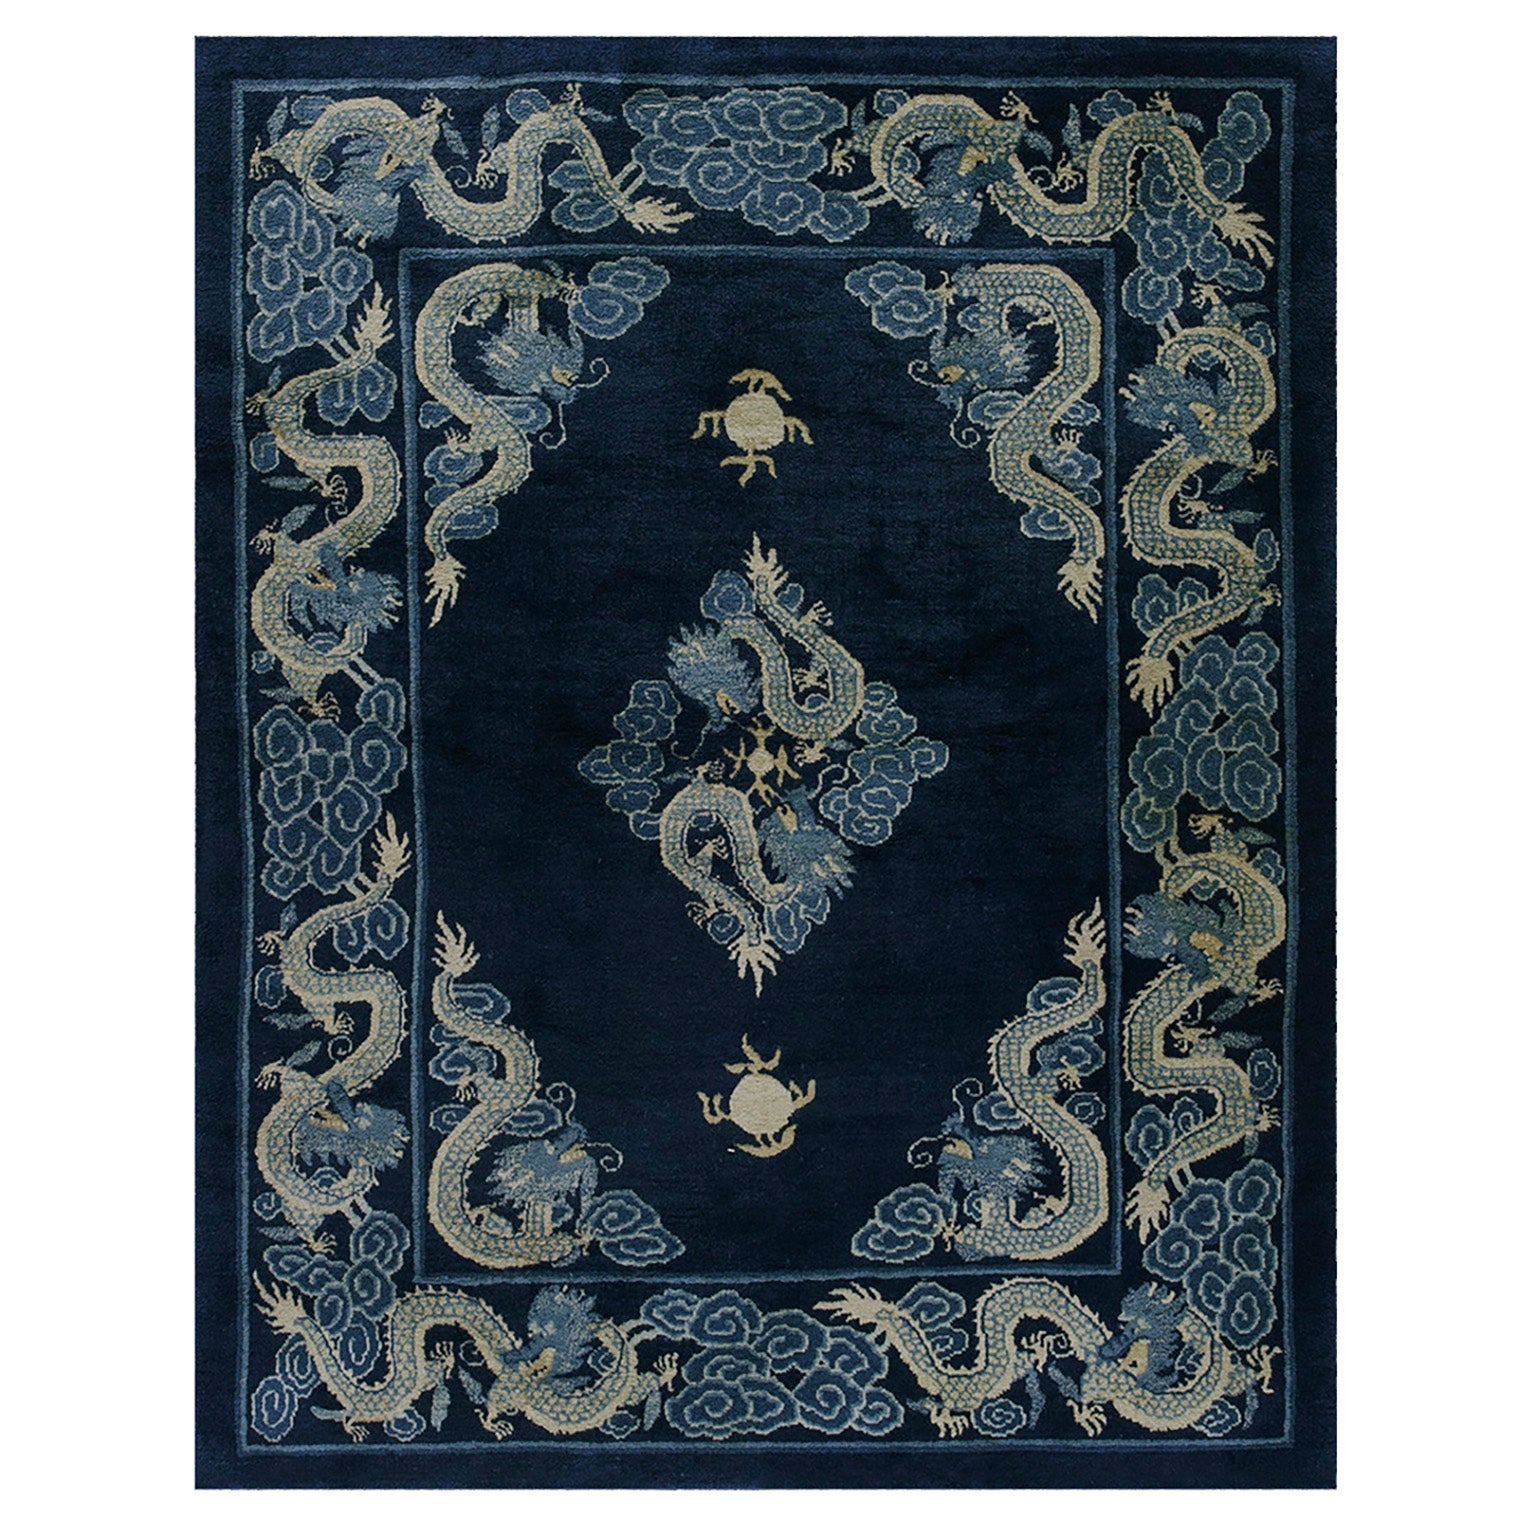 Early 20th Century Chinese Peking Dragon Carpet ( 4'8" x 5'10" - 142 x 178 )